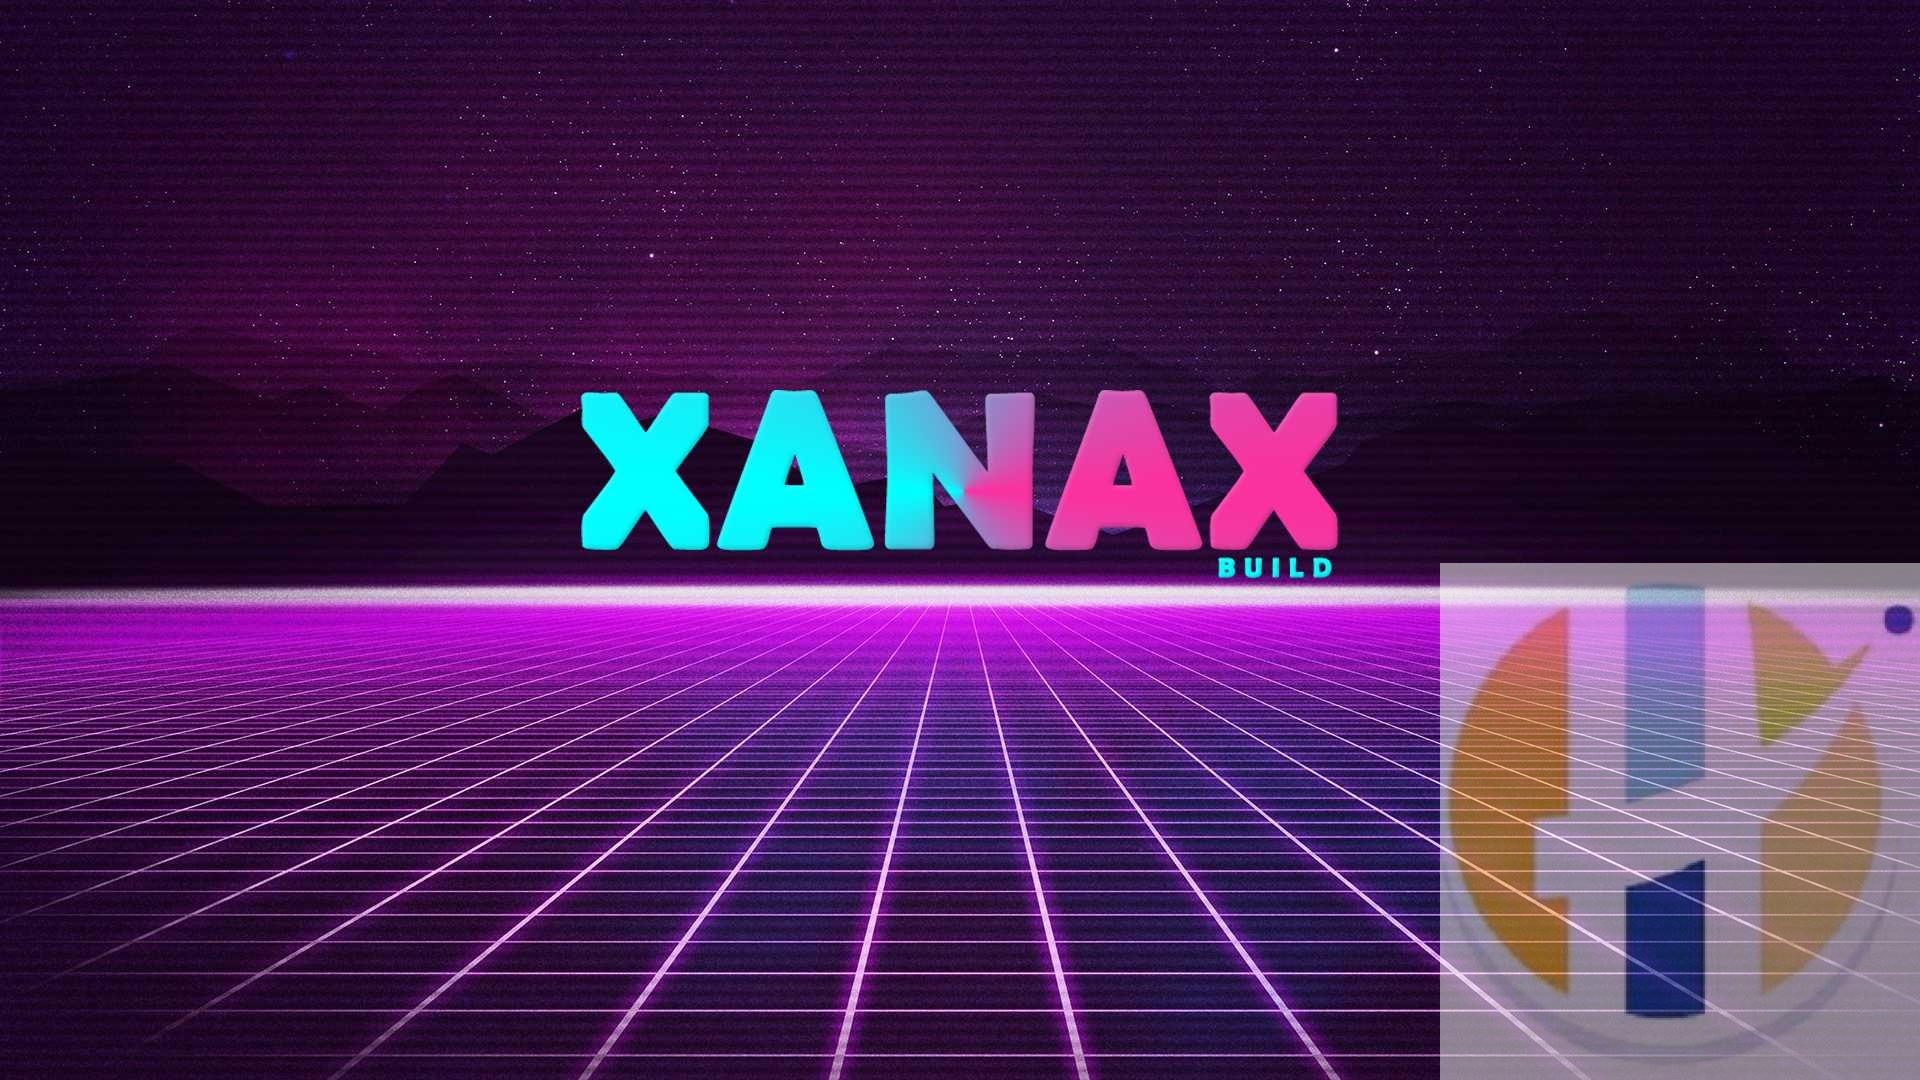 How to install XANAX Builds on Kodi 18 Leia - Husham.com - Husham ...